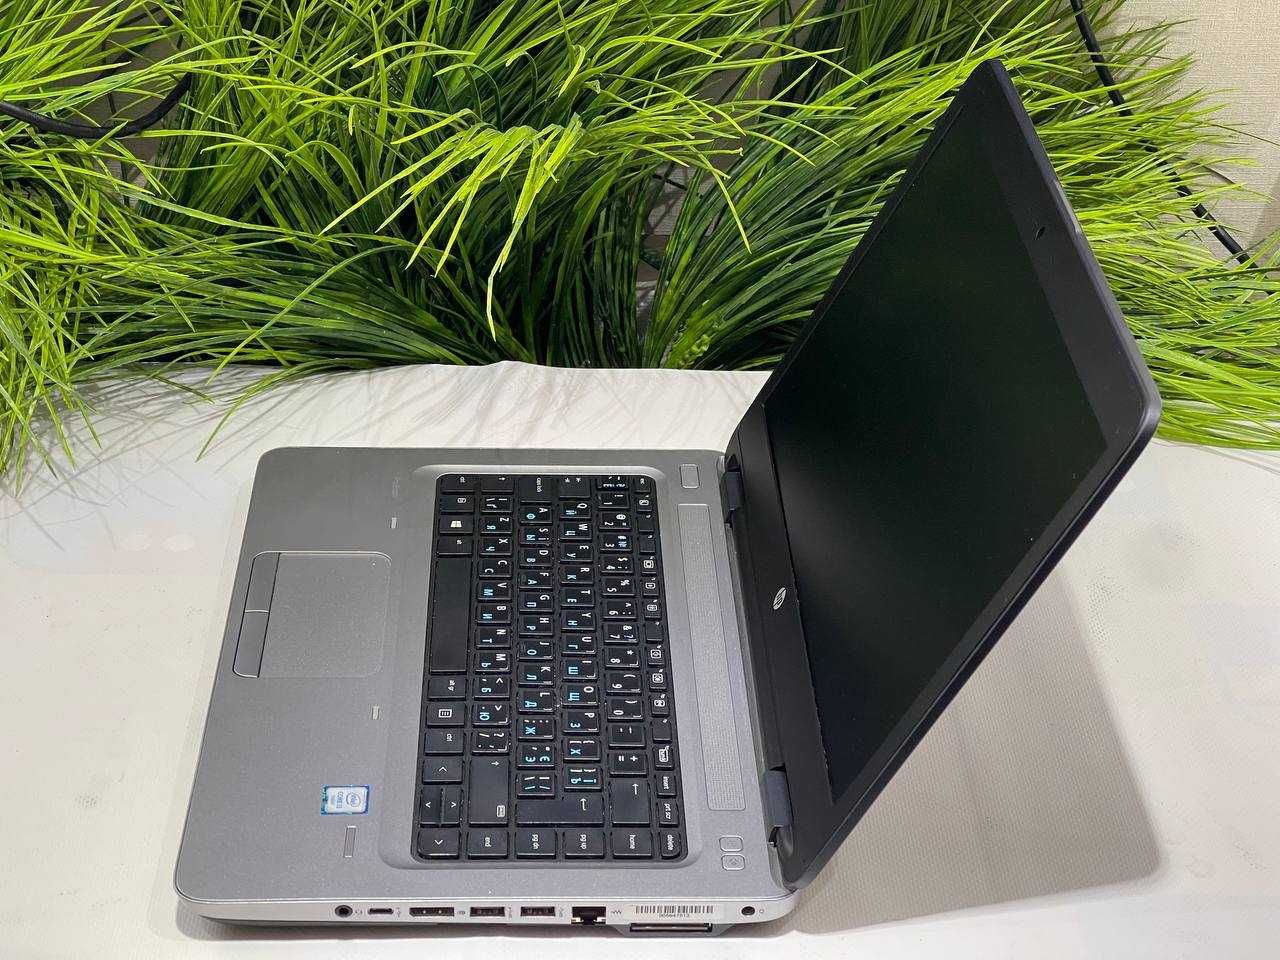 Ноутбук HP 640 G2 ∎ i3-6006U∎DDR4-4GB∎SSD-120GB∎вебкамера∎4G∎АКБ 4часа